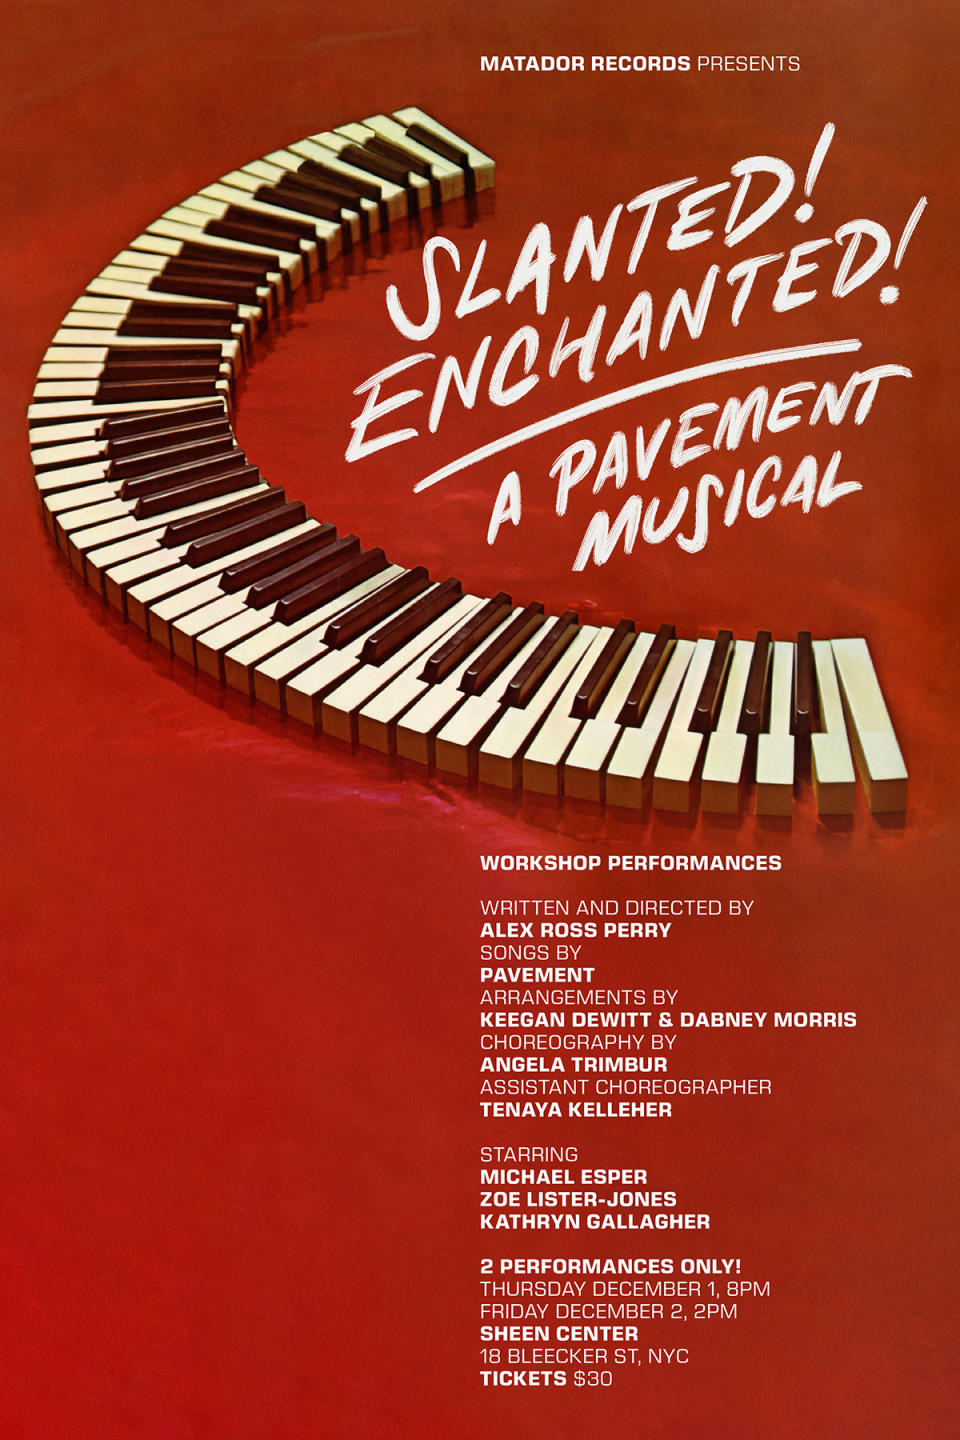 slanted enchanted pavement musical